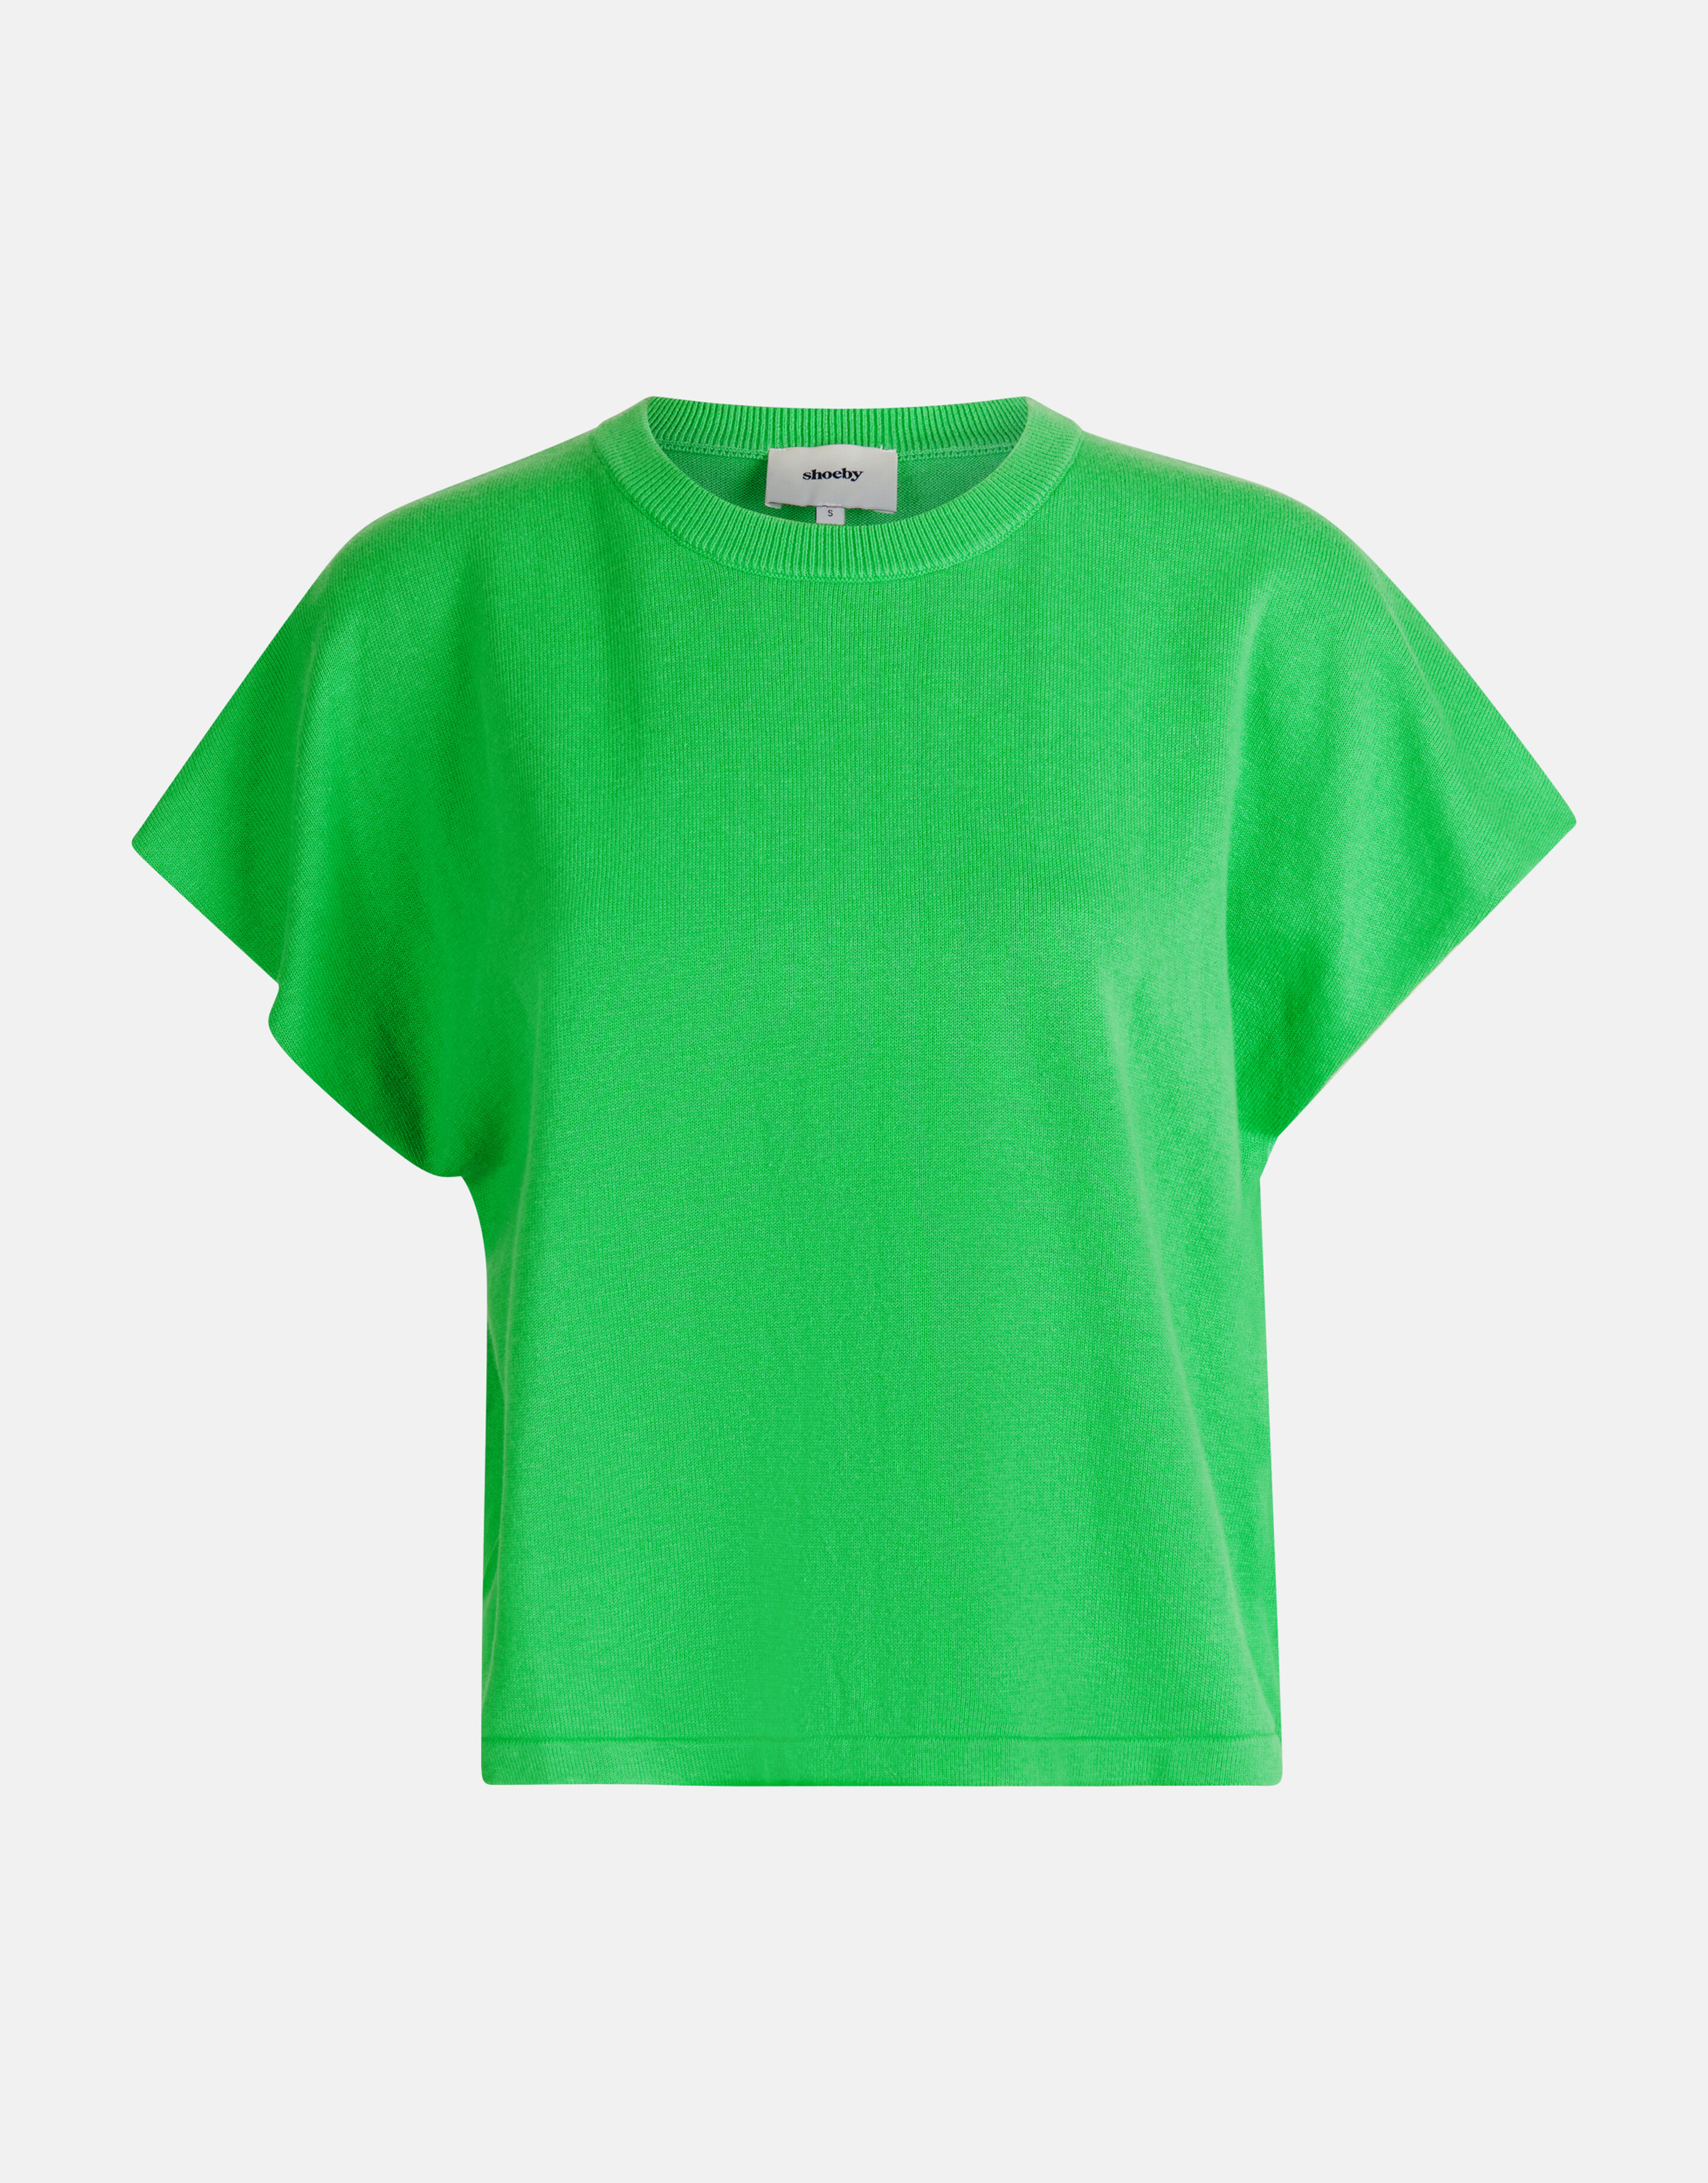 Gebreid T-shirt Groen By Mieke SHOEBY WOMEN